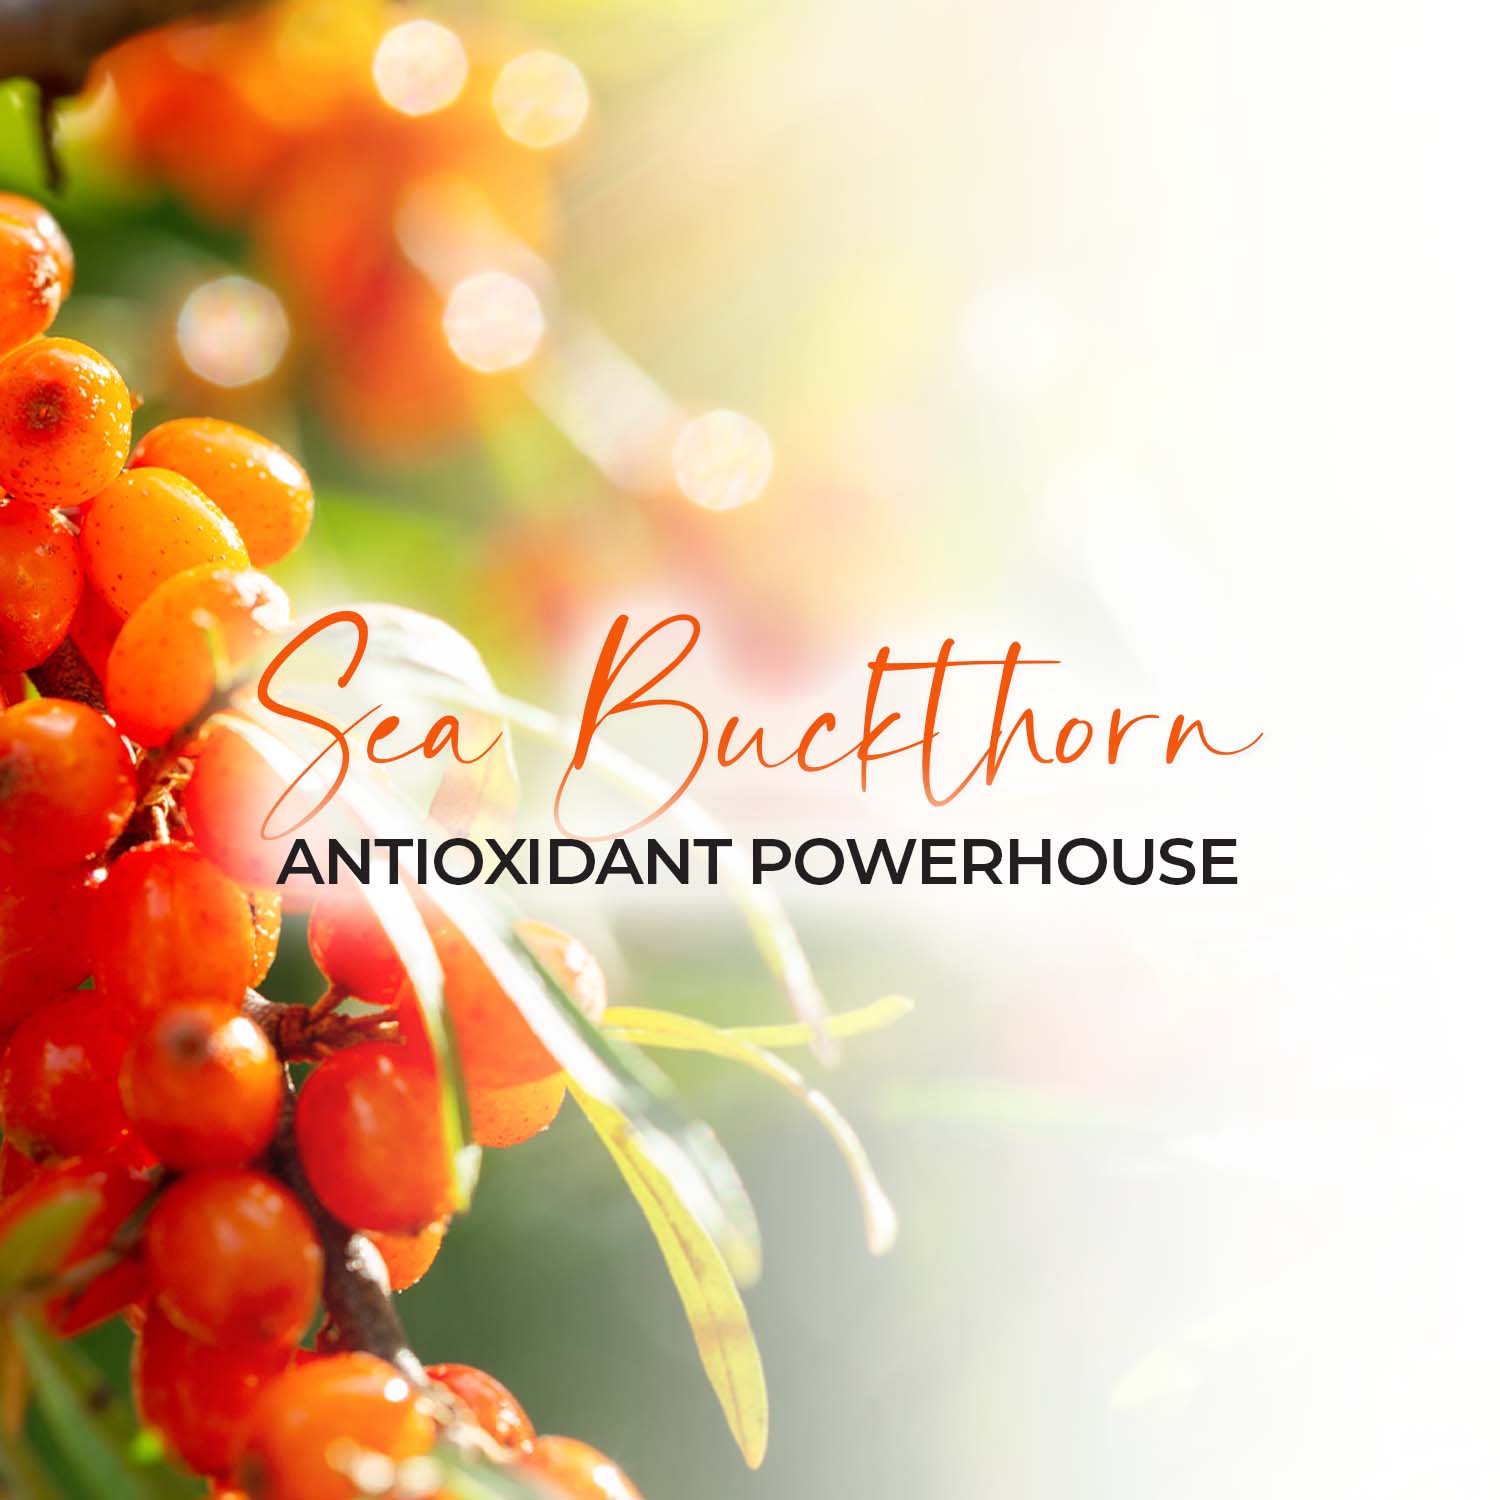 Sea Buckthorn Antioxidant Powerhouse